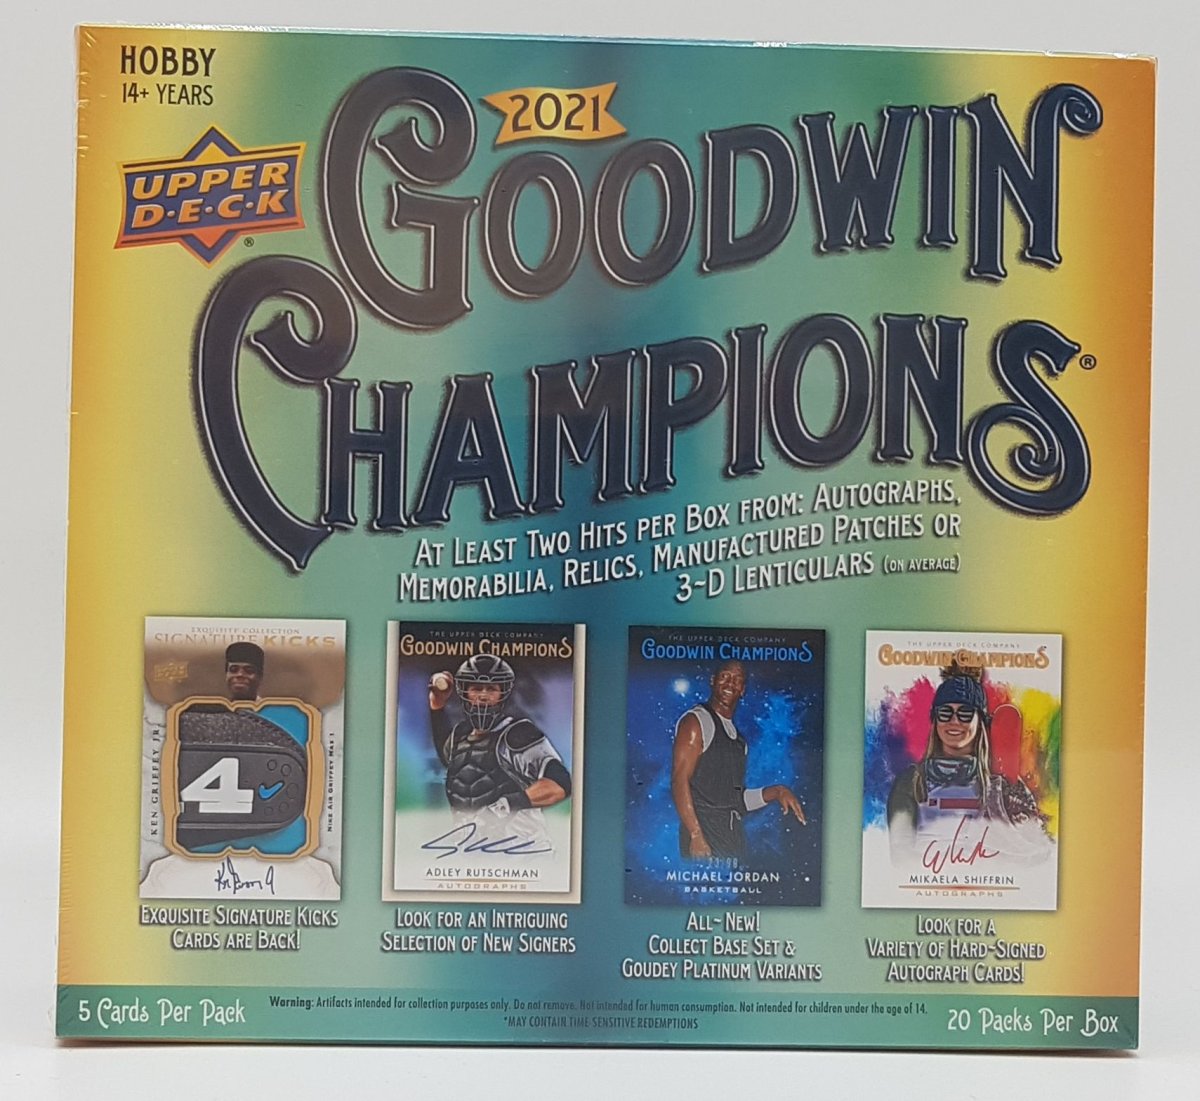 Upper Deck Goodwin Champions Hobby Box 2021 Billig im Shop kaufen